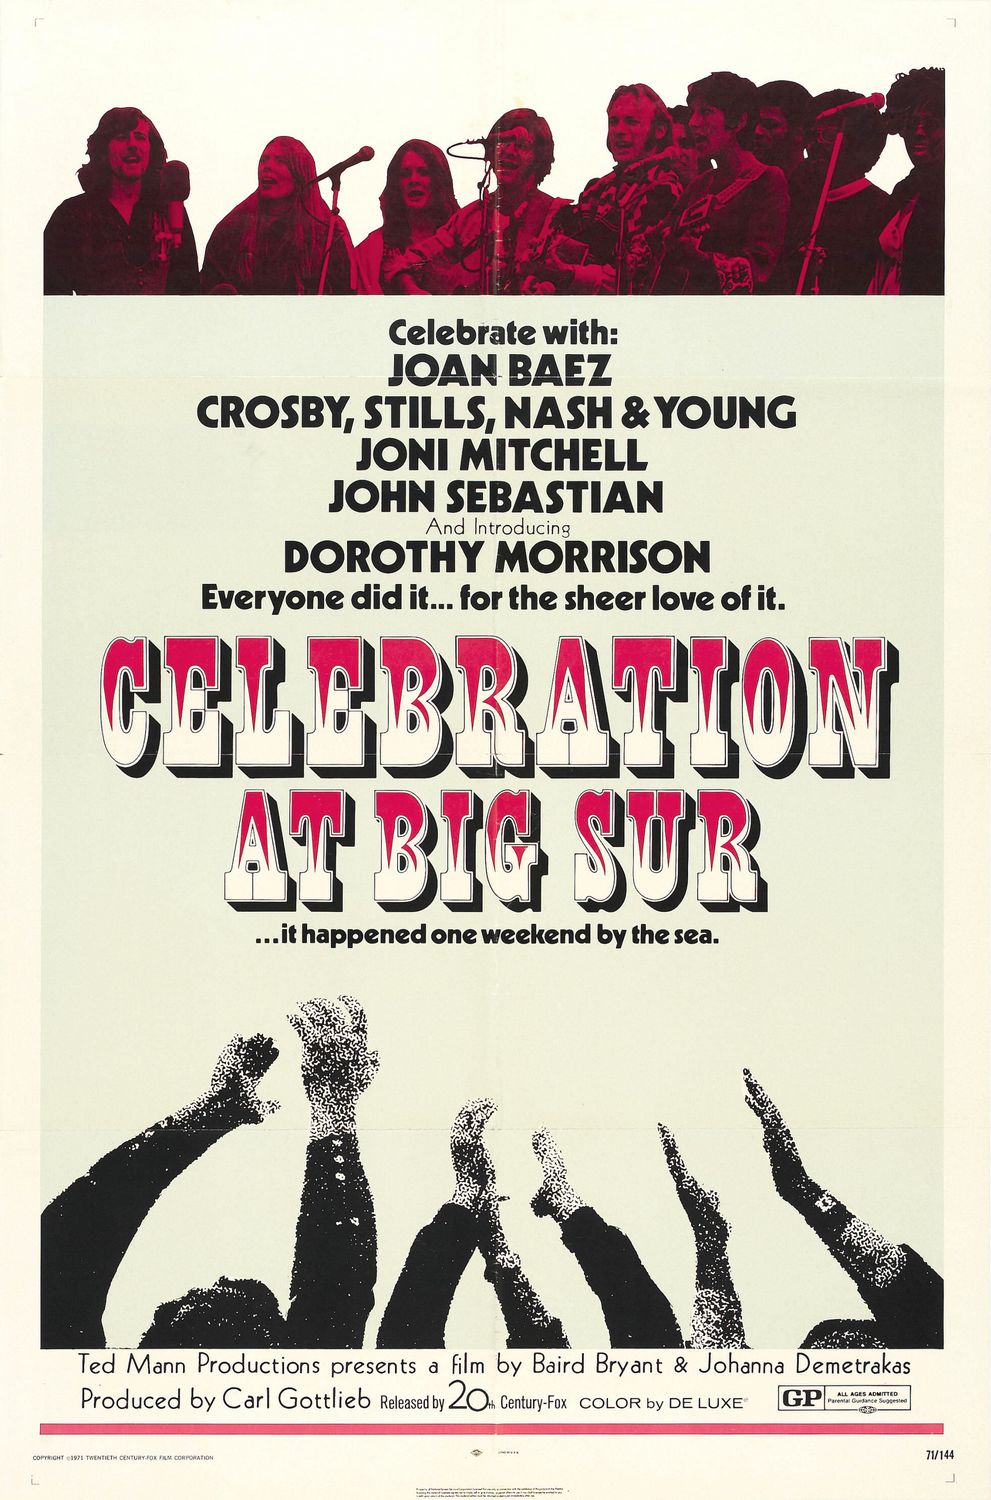 Extra Large Movie Poster Image for Celebration at Big Sur 